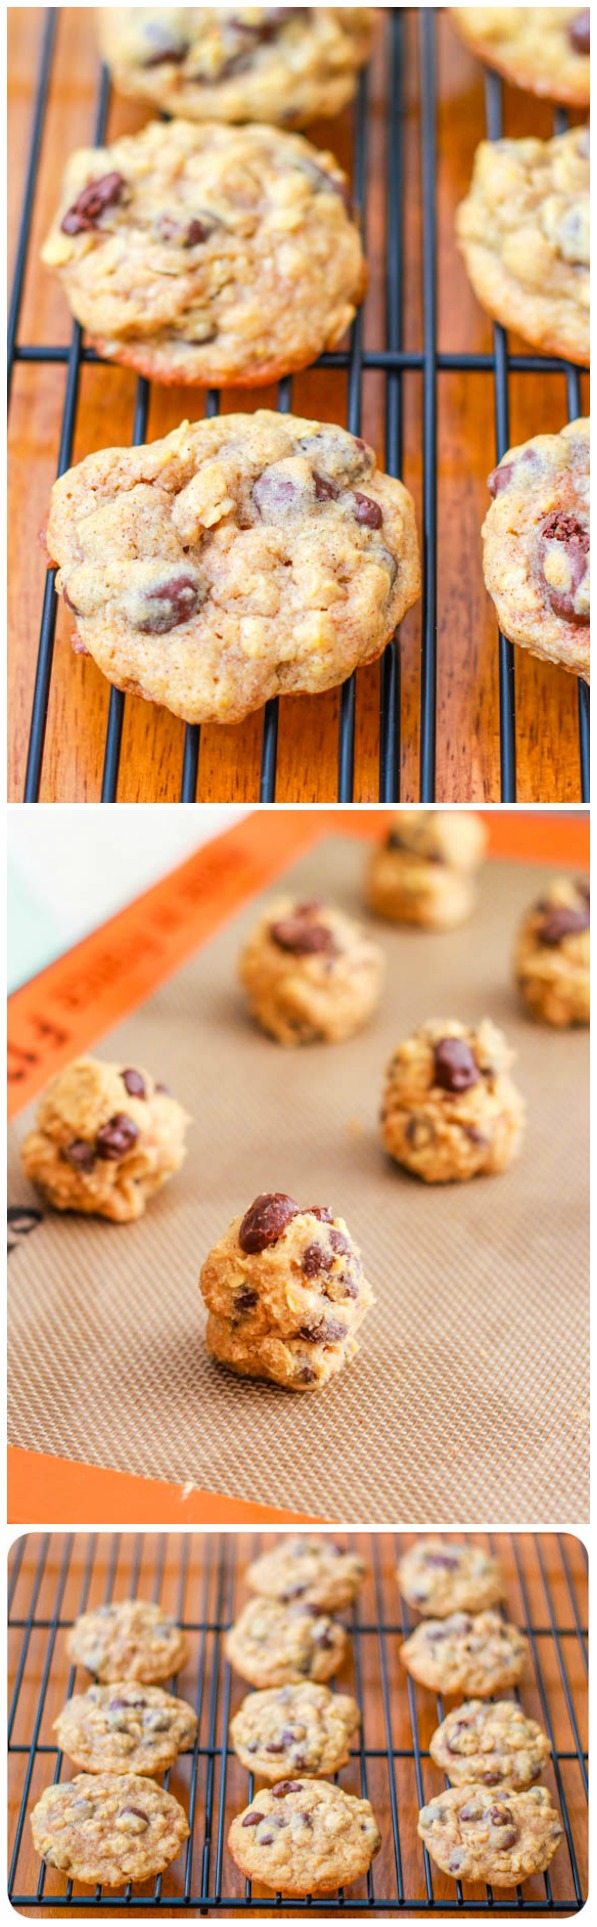 3 images of oatmeal raisinet cookies